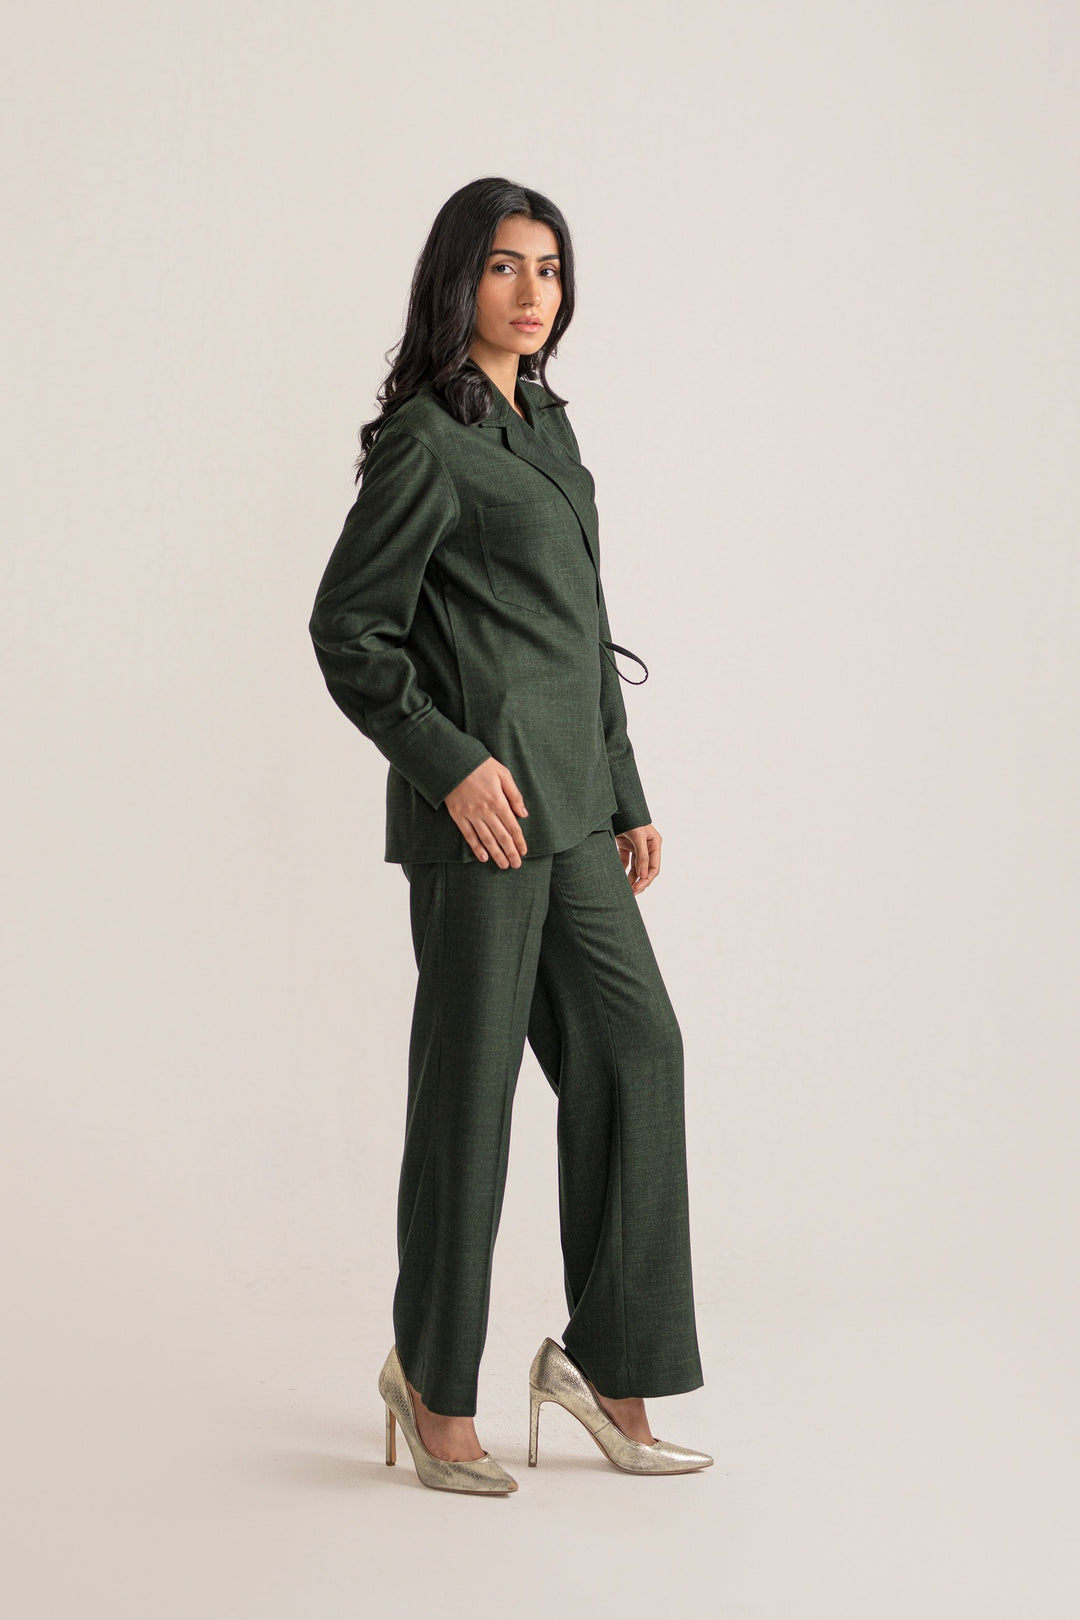 Emerald Green Kimono Suit price